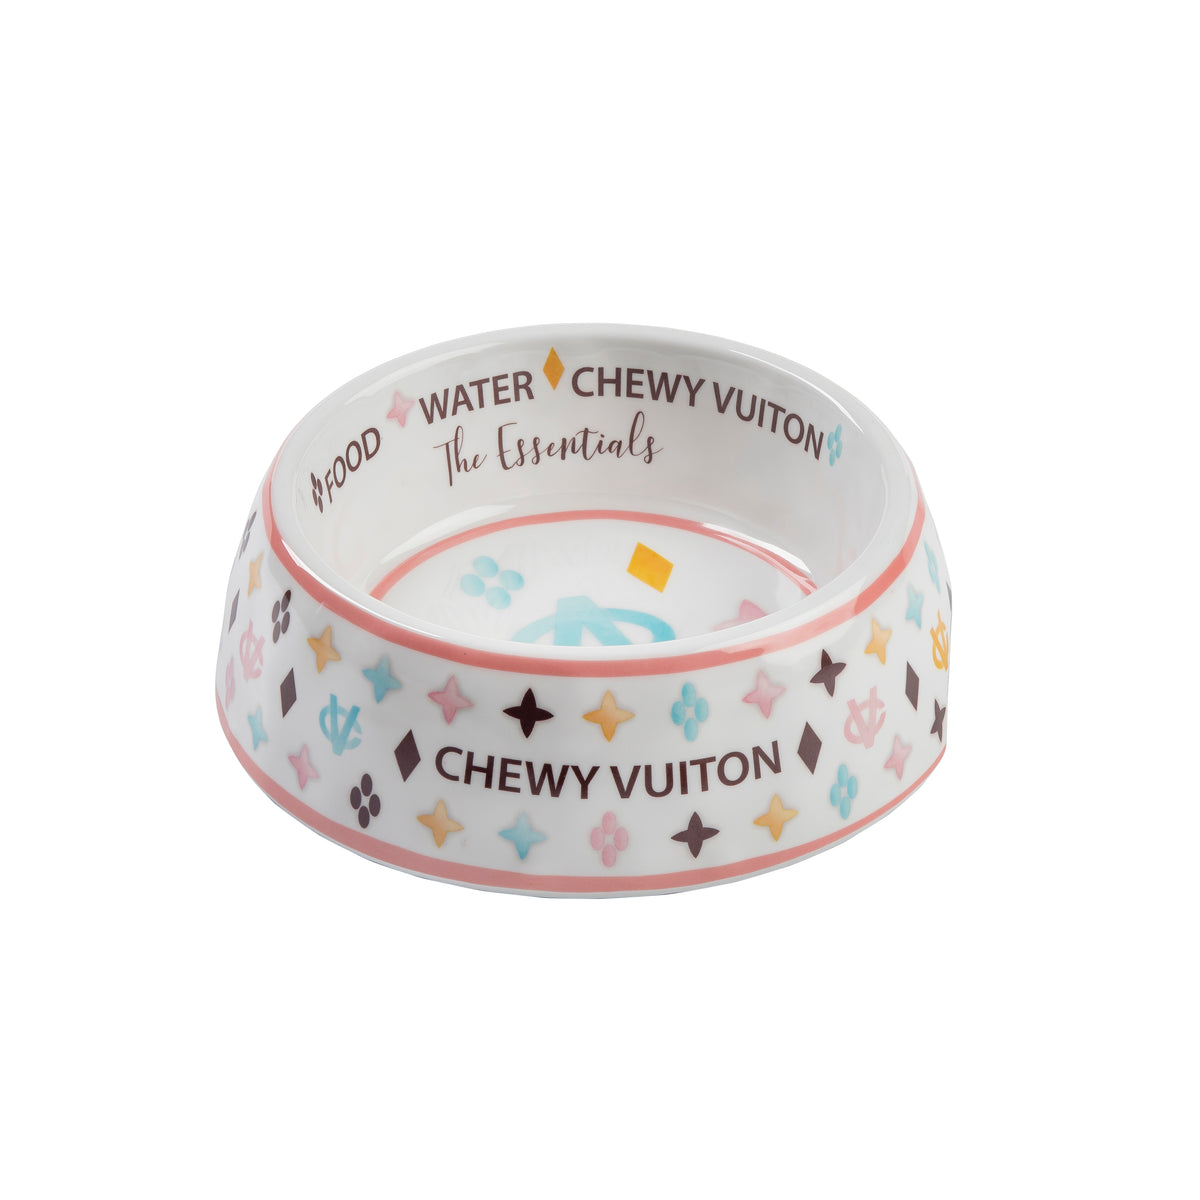 Chewy Vuiton Pet Bowl The Pretty Hot Mess